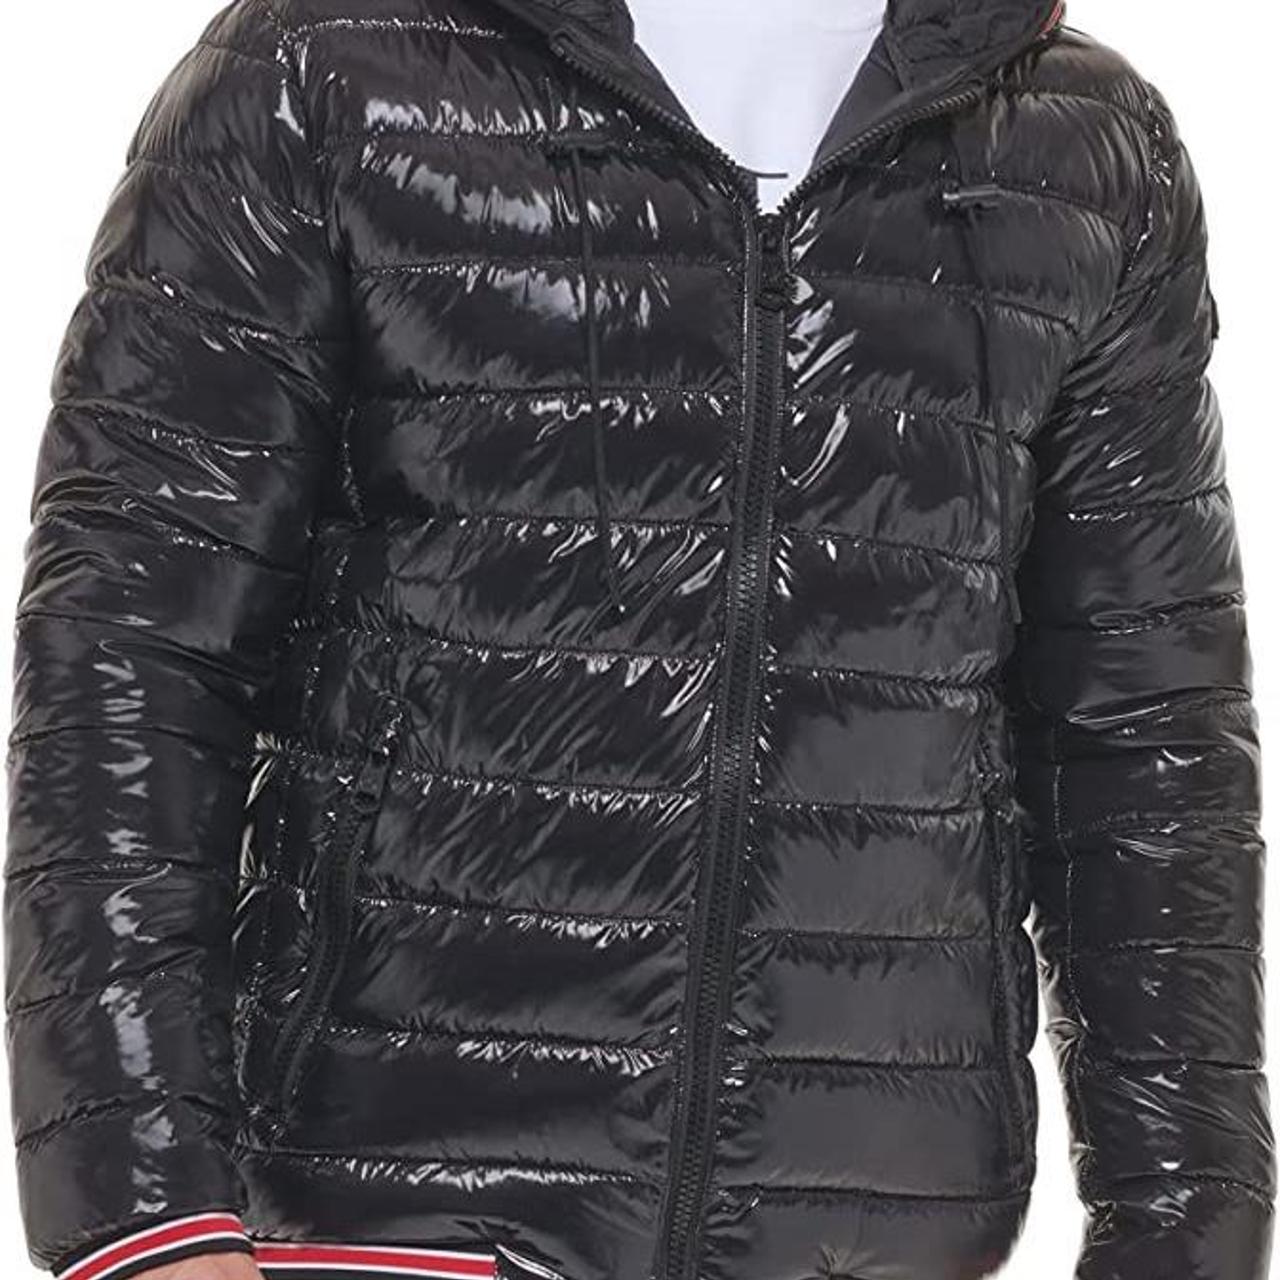 Calvin Klein full length leather coat NWT - Coats & jackets